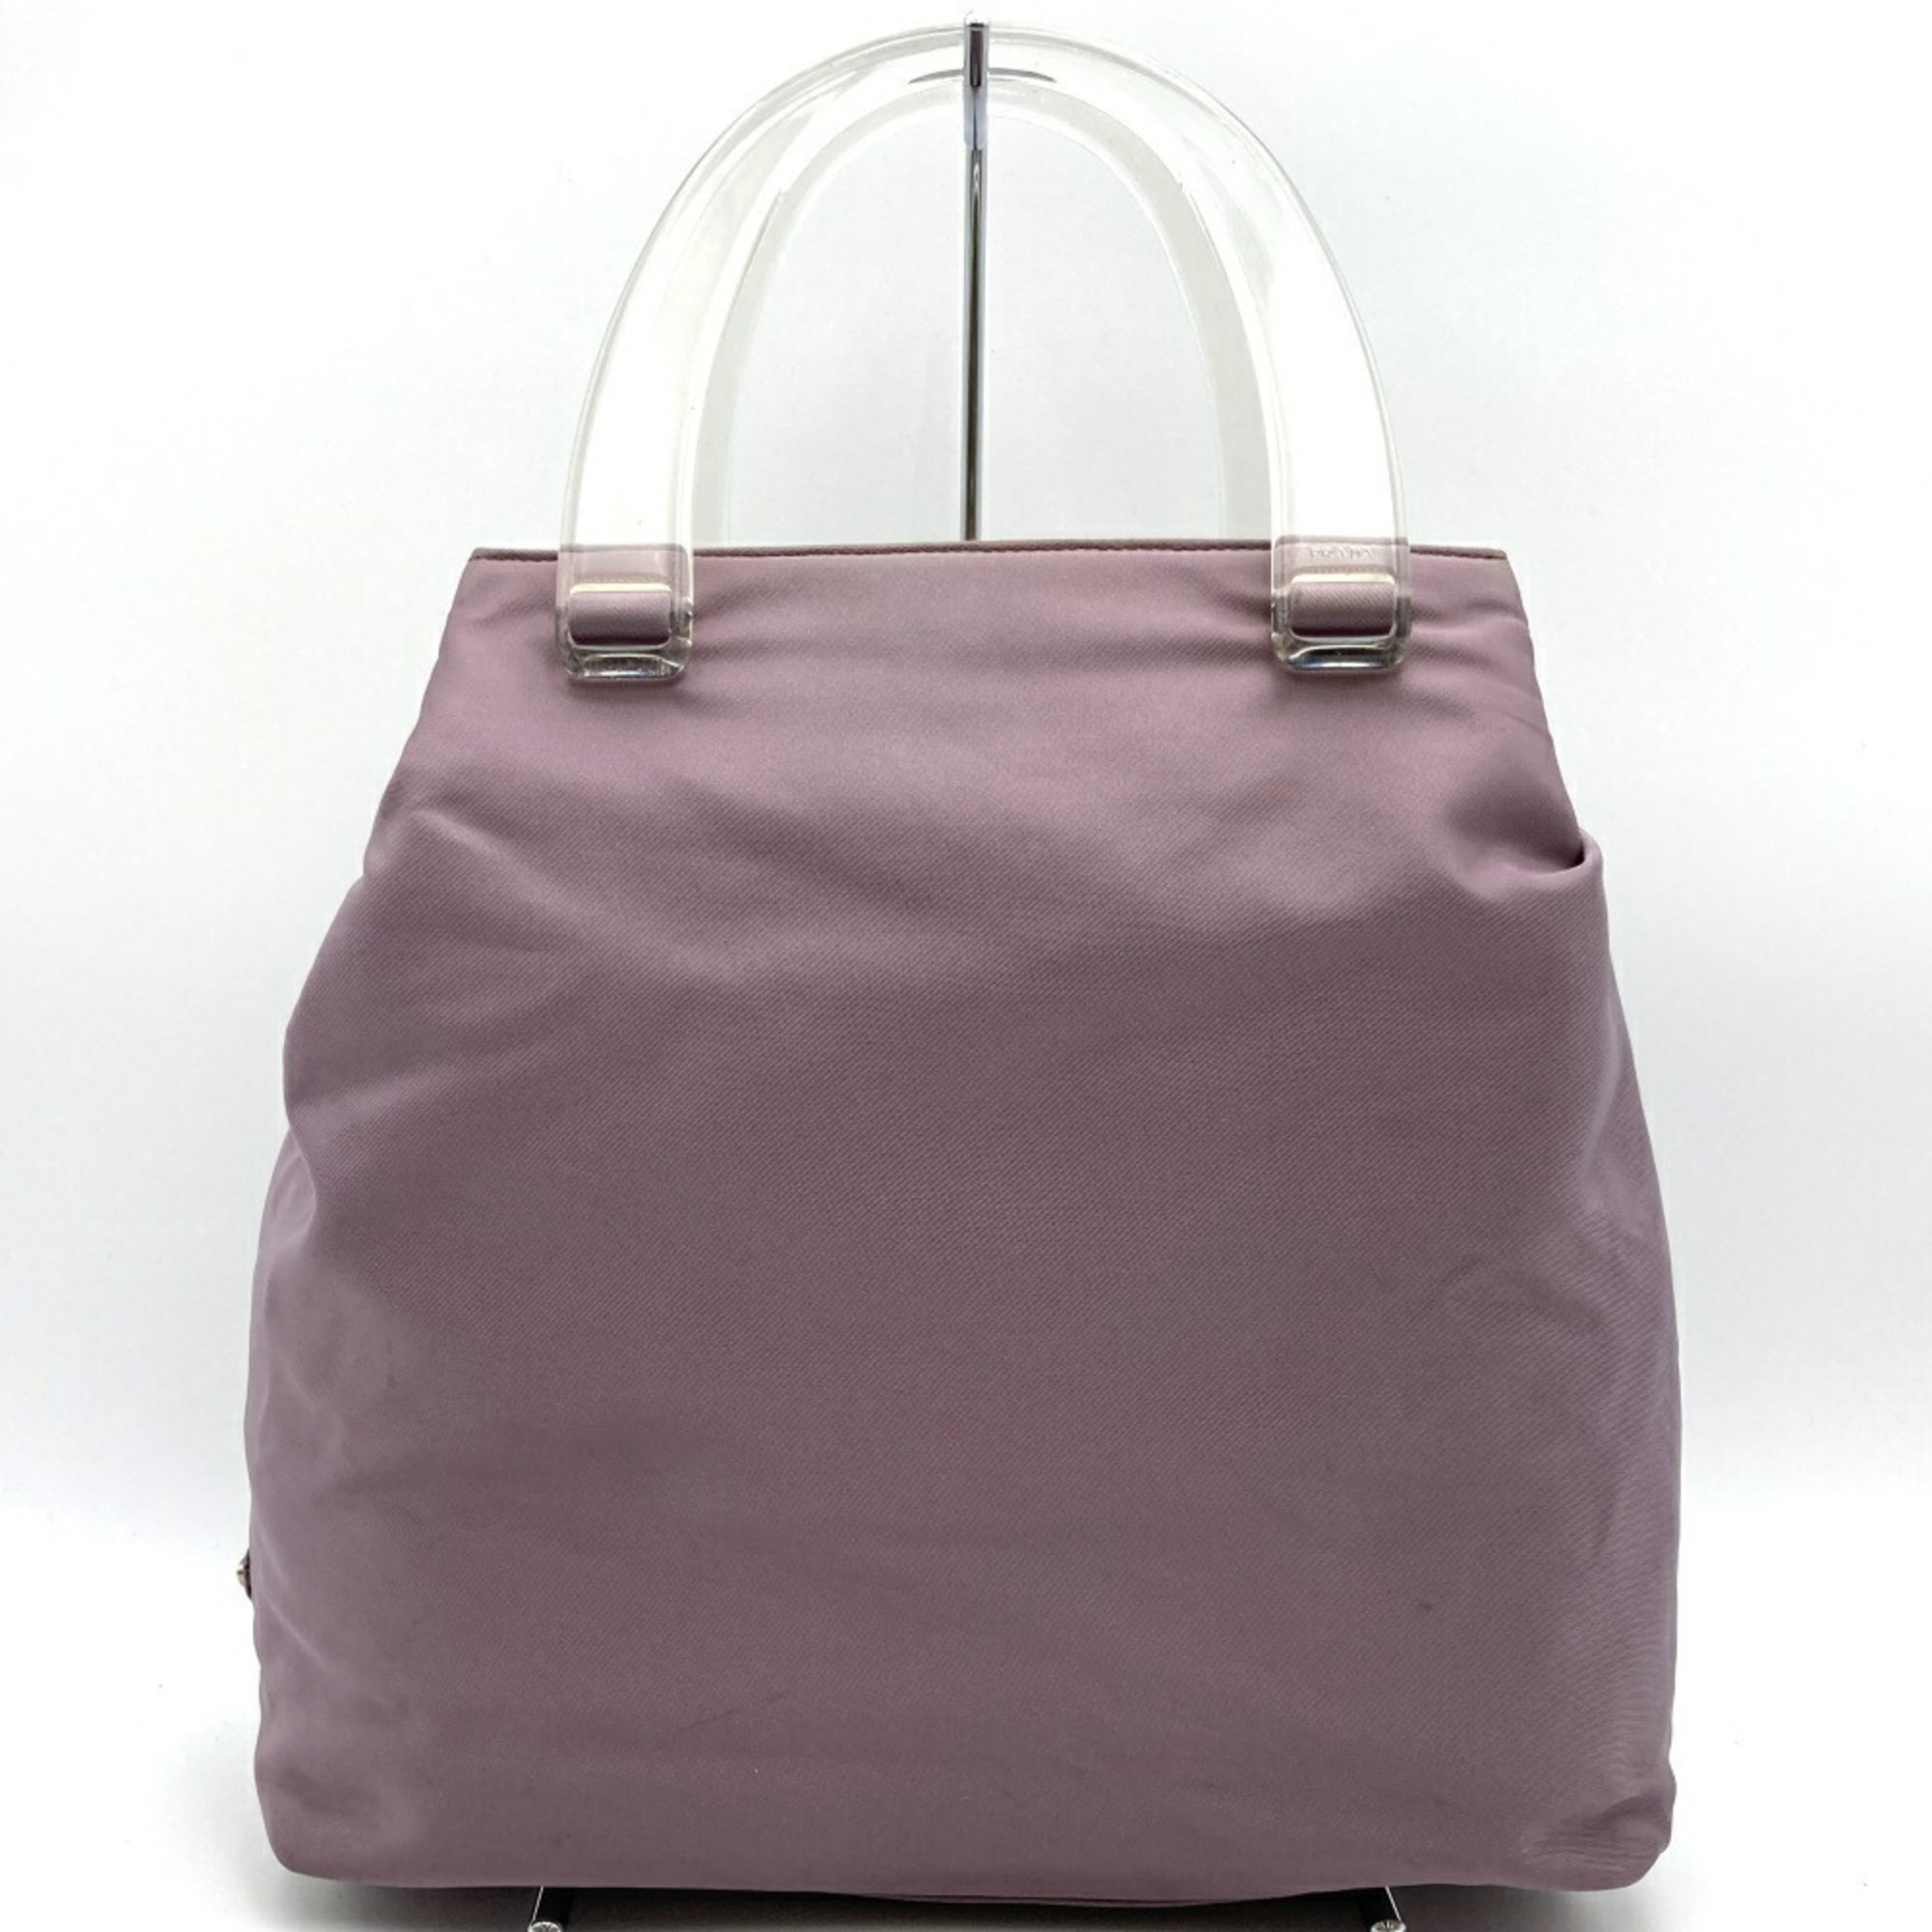 Prada handbag with plastic handle and clear handle, purple nylon, for women, triangle, PRADA